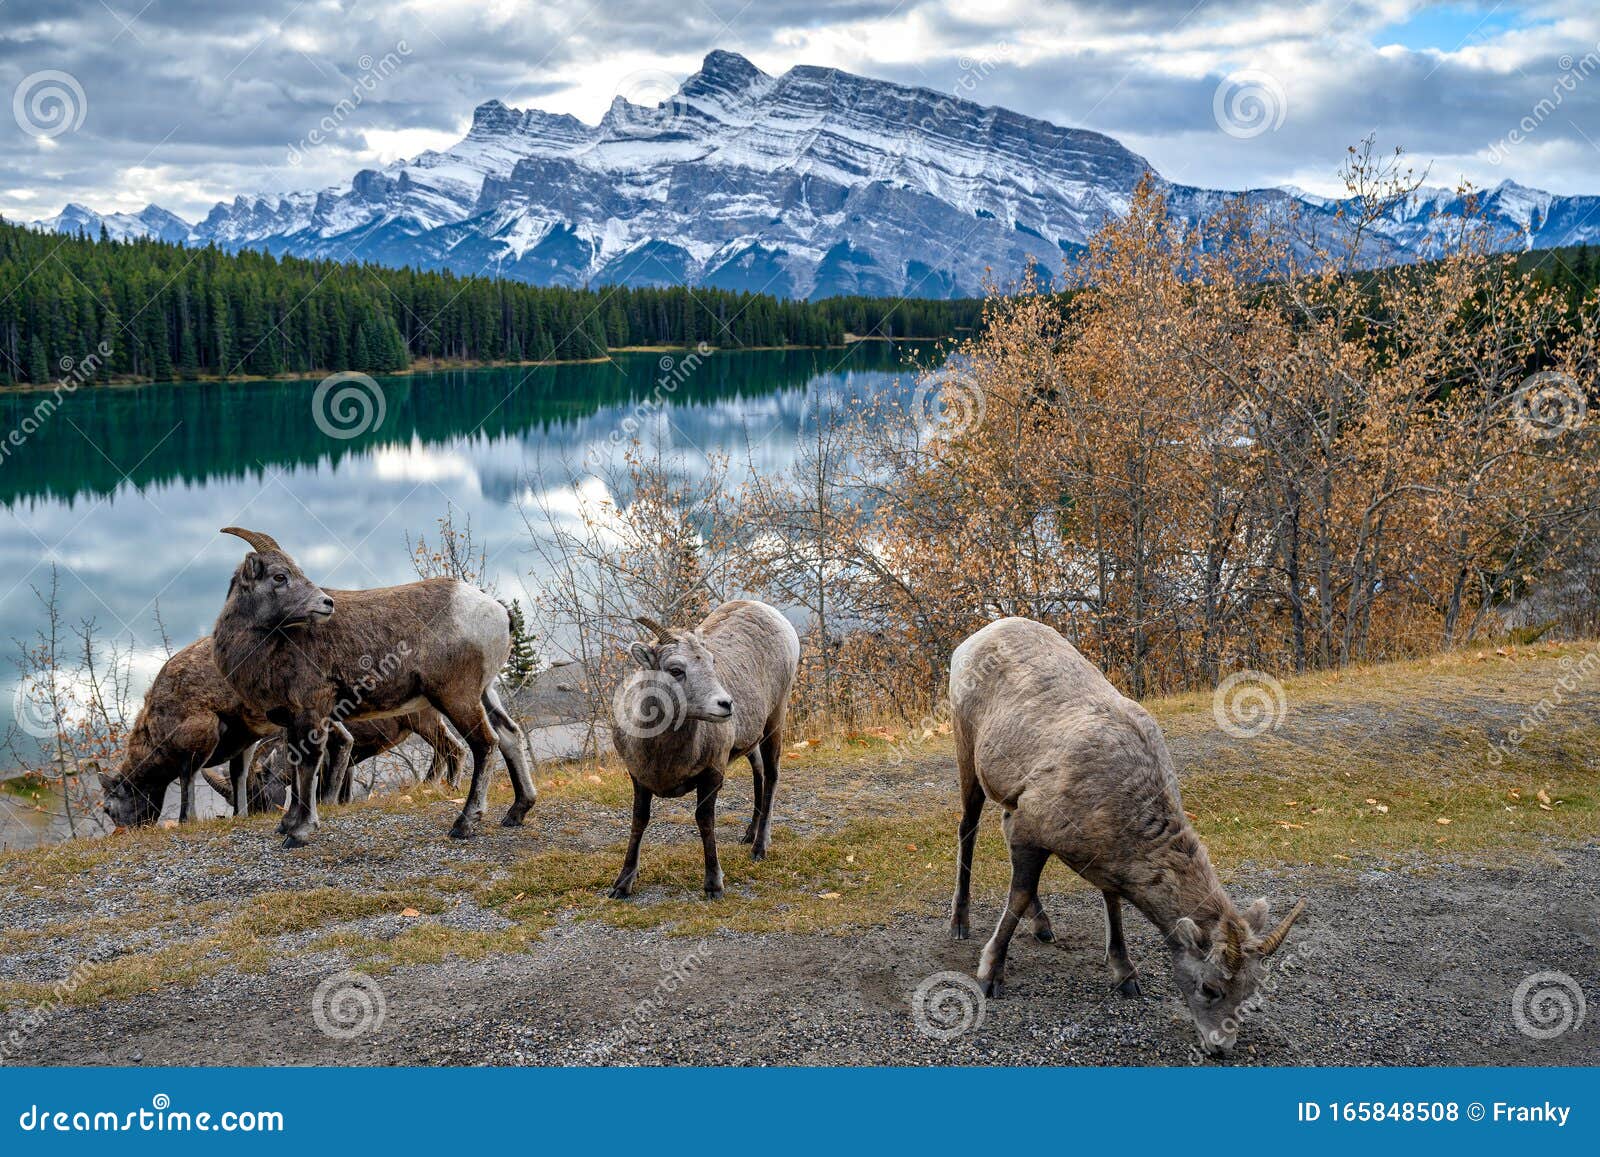 bighorn sheep ovis canadensis, banff national park, alberta, canada